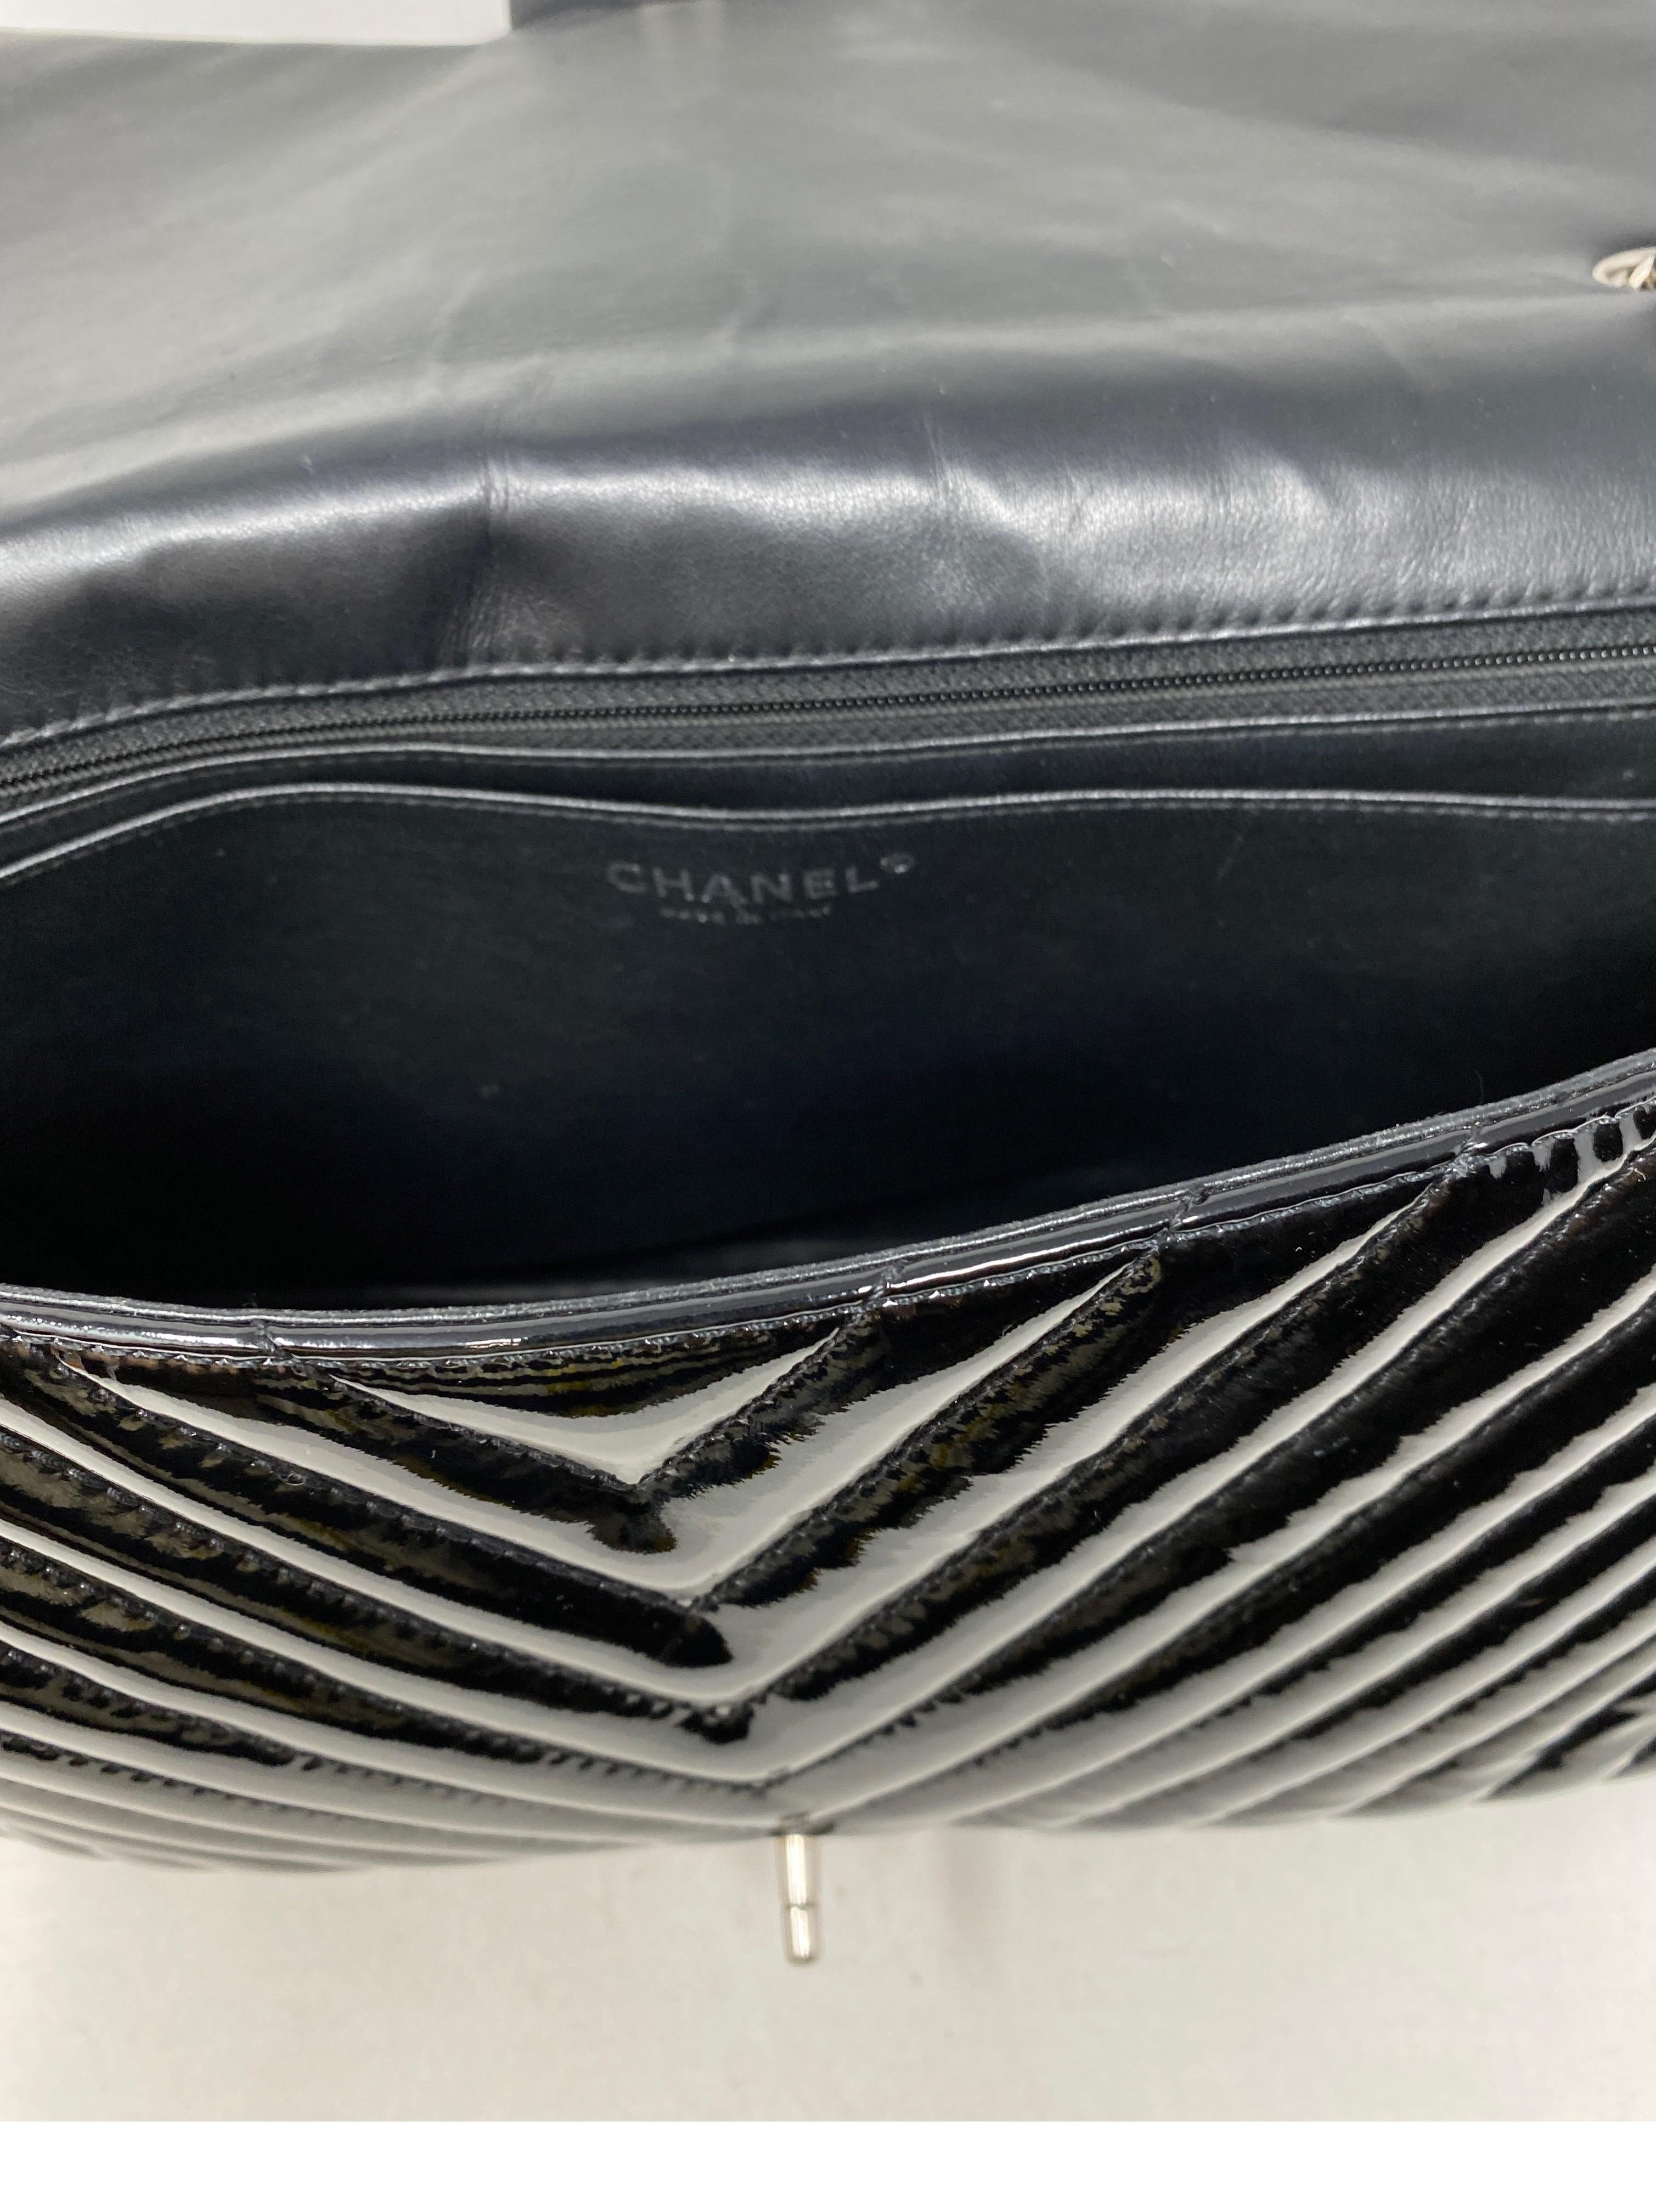 Chanel Black Jumbo Patent Leather Bag 15